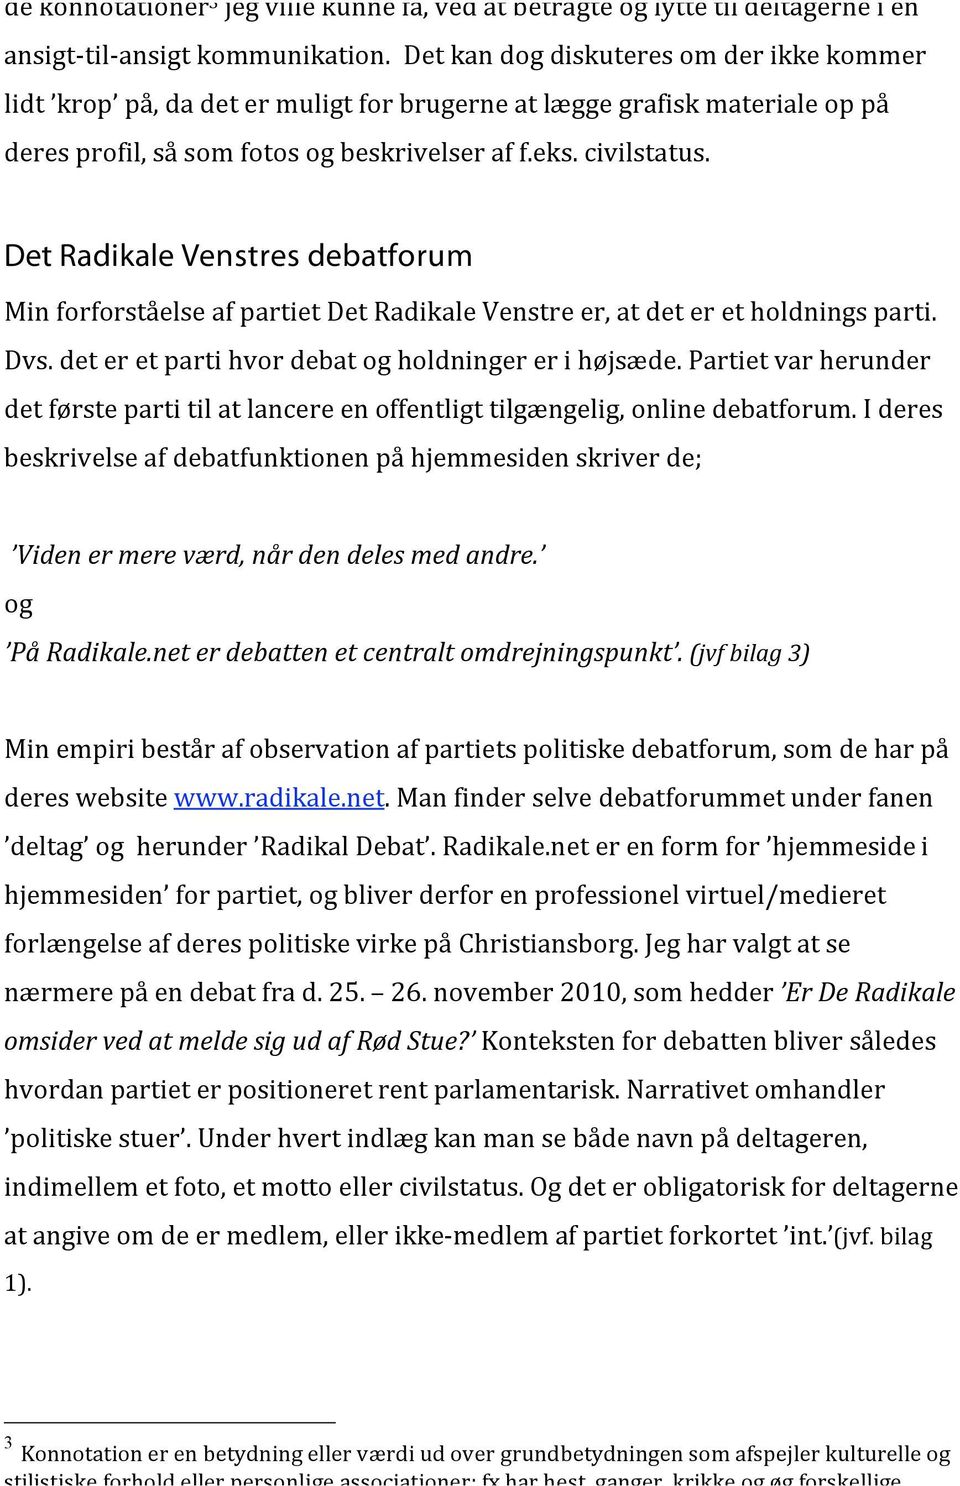 Det Radikale Venstres debatforum MinforforståelseafpartietDetRadikaleVenstreer,atdeteretholdningsparti. Dvs.deteretpartihvordebatogholdningererihøjsæde.